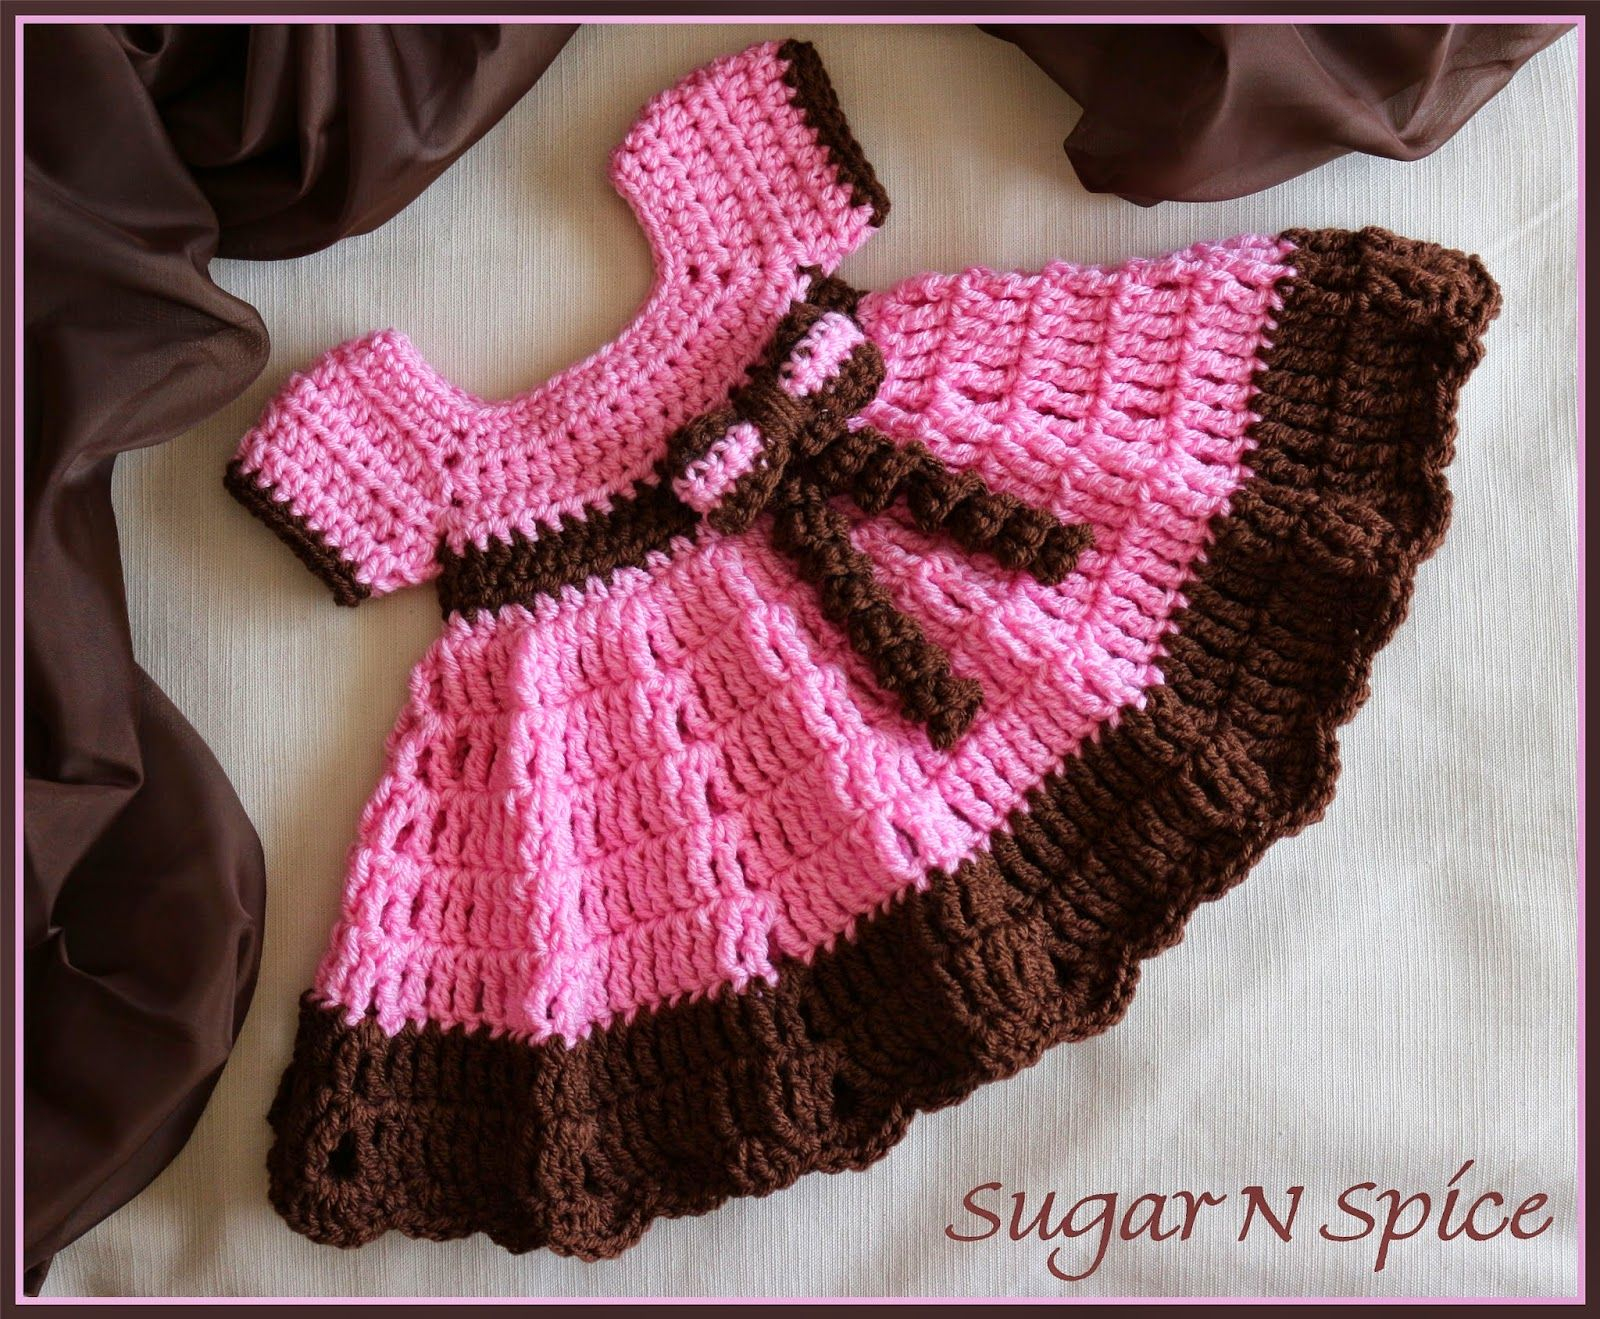 Crochet Baby Dress Free Pattern This Housewife Life Sugar N Spice Dress Free Pattern Beautiful